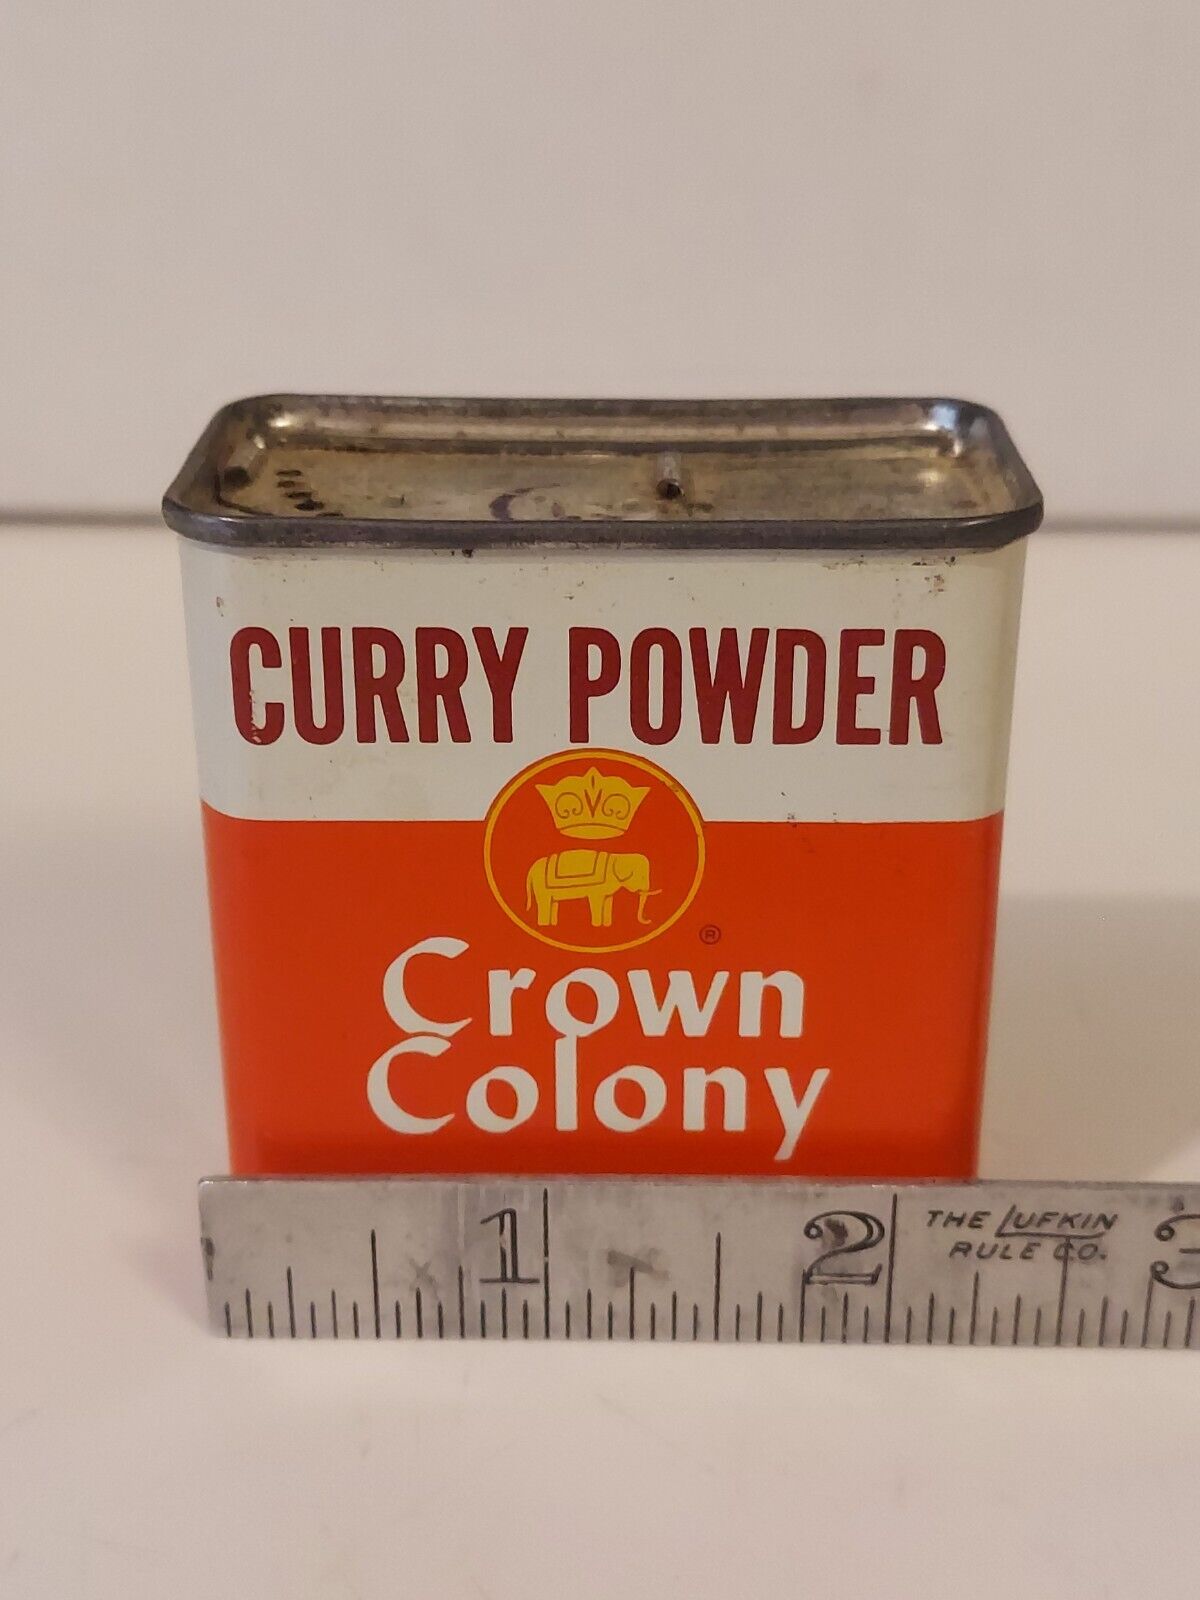 Crown Colony Brand 1961 Curry Powder Spice Tin